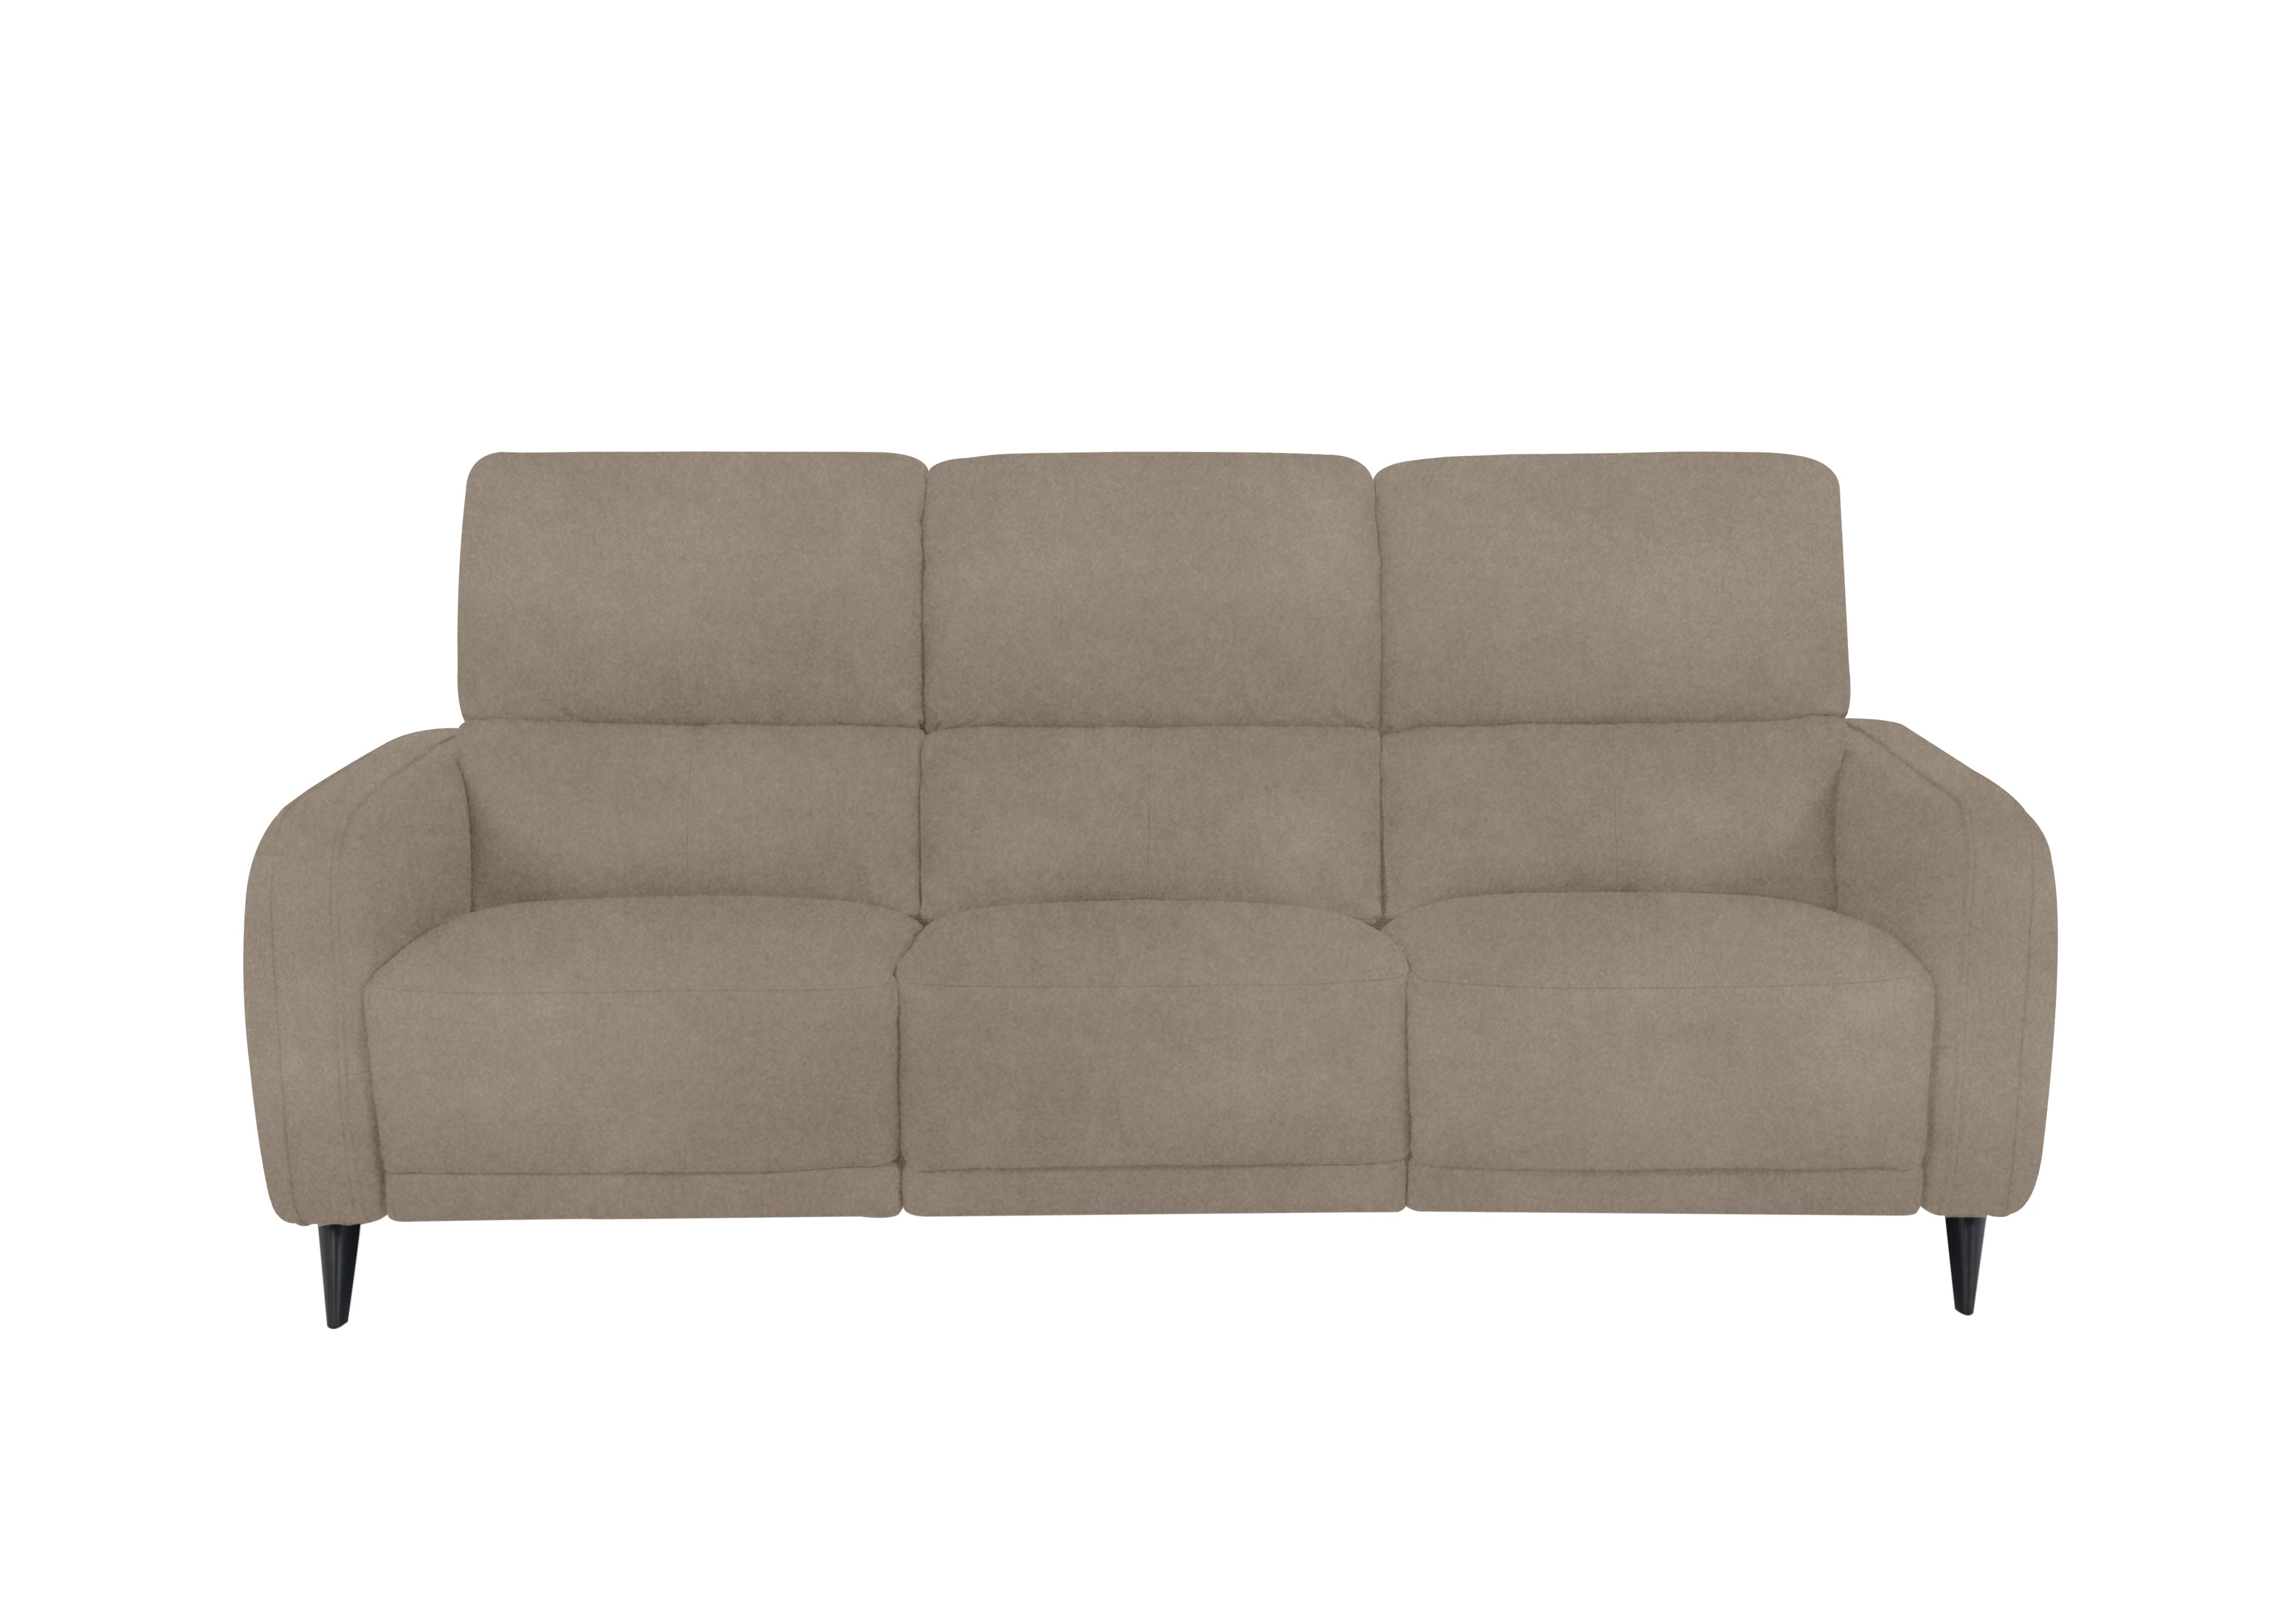 Logan 3 Seater Fabric Sofa in Fab-Meg-R32 Light Khaki on Furniture Village